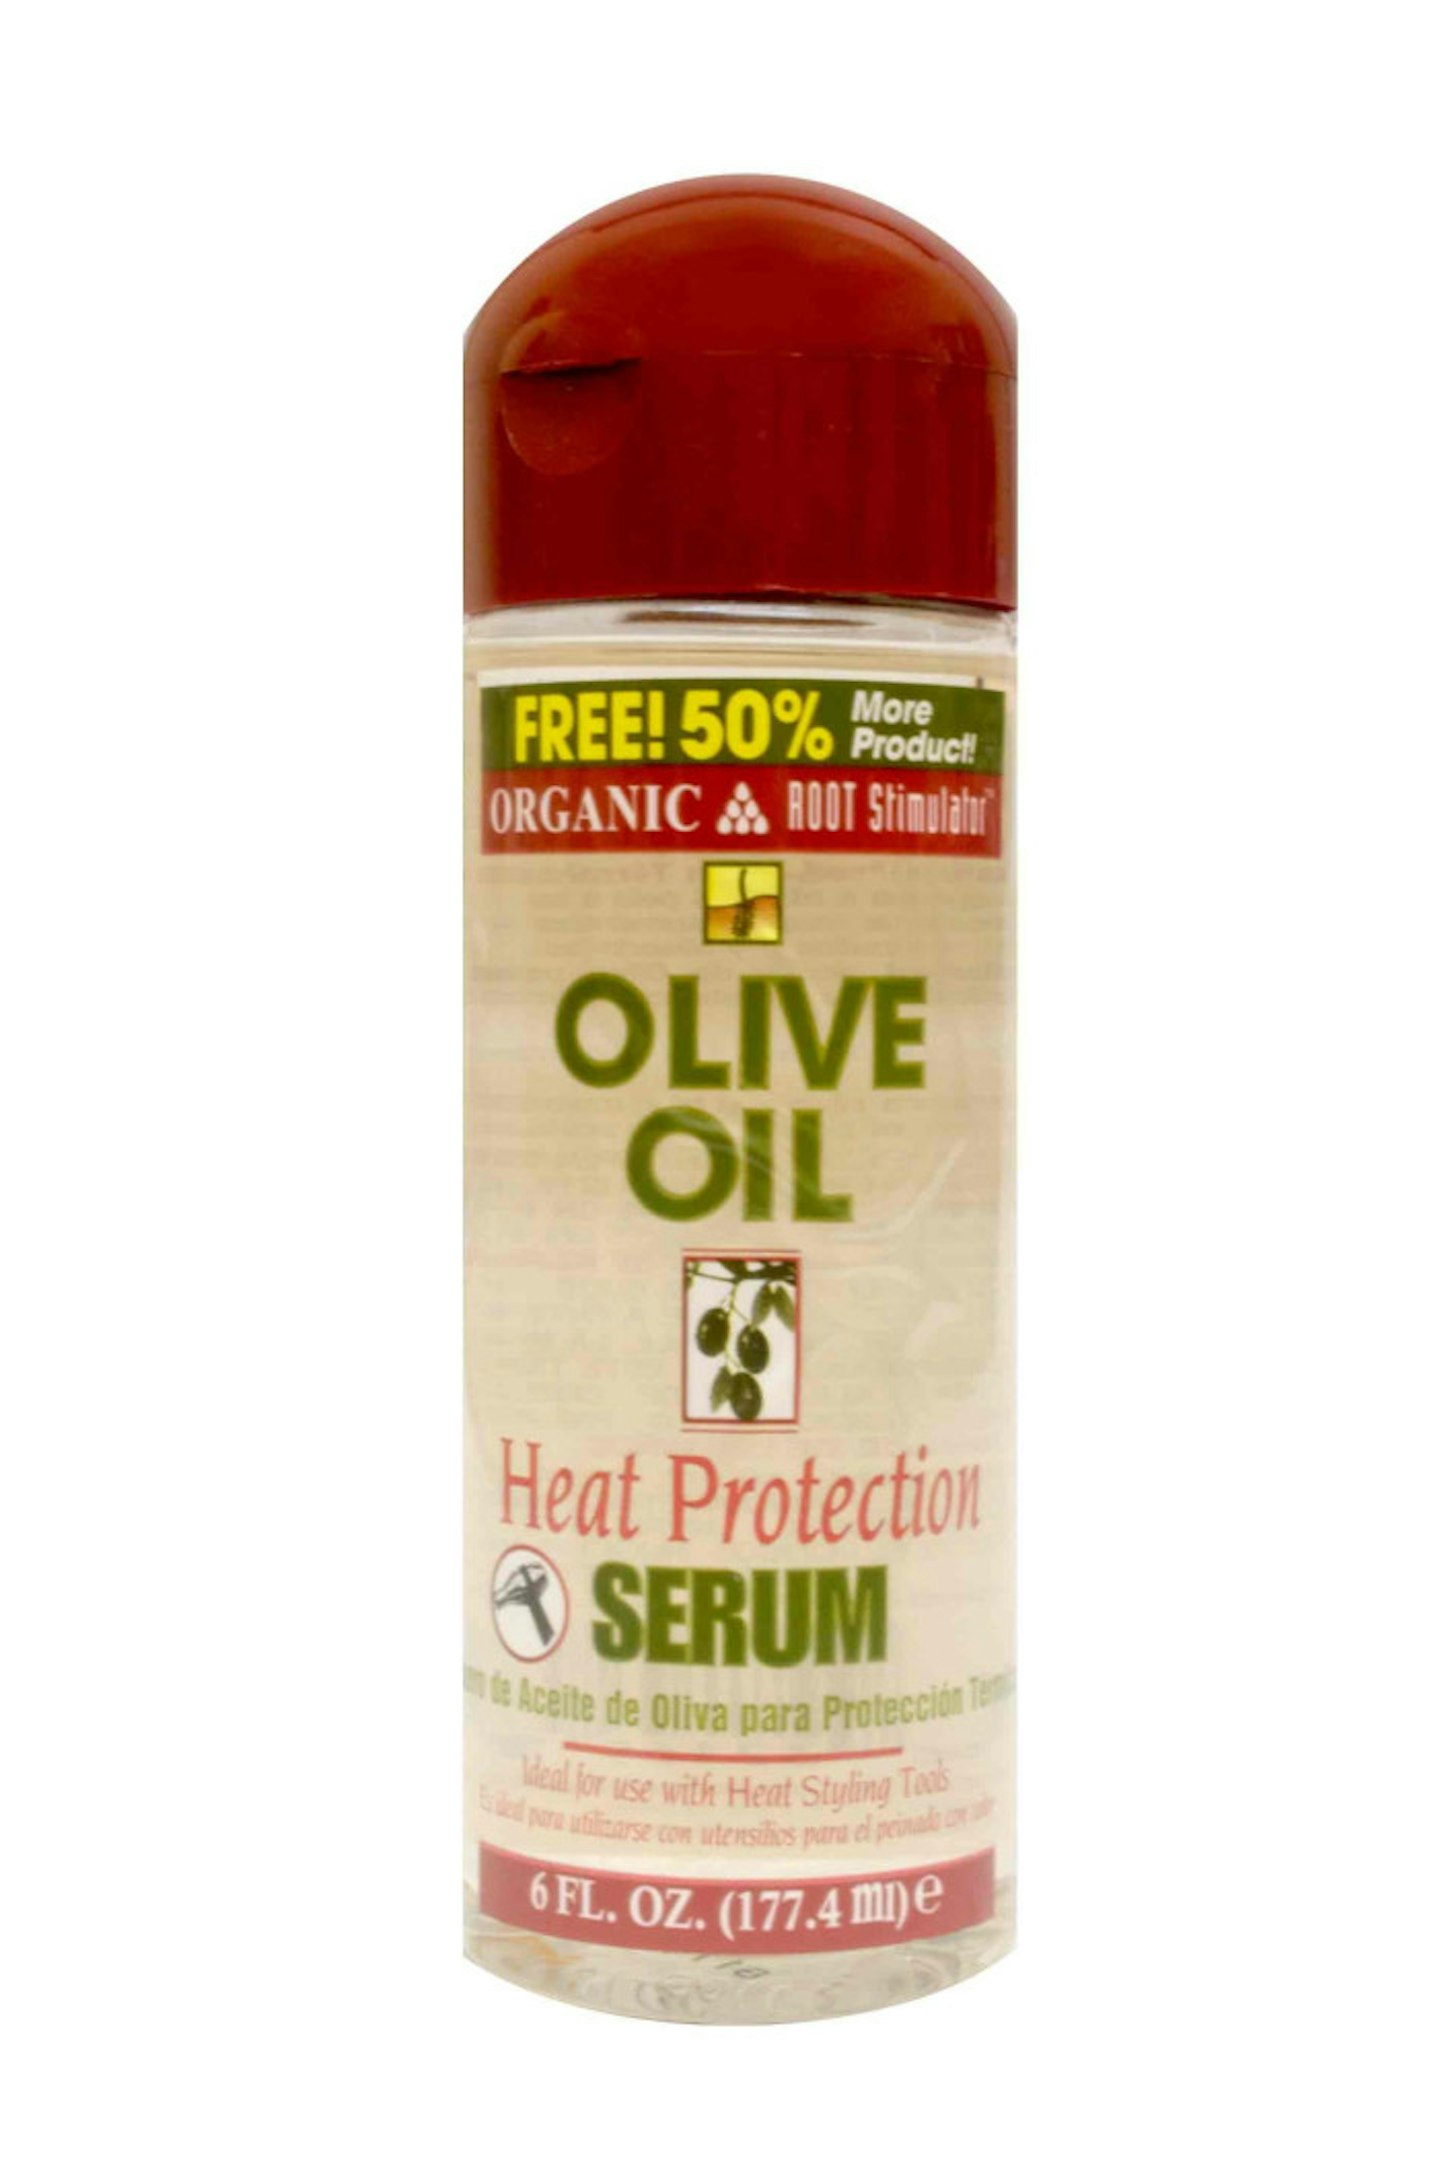 Organic Root Stimulator Olive Oil Heat Protection Serum, £4.99